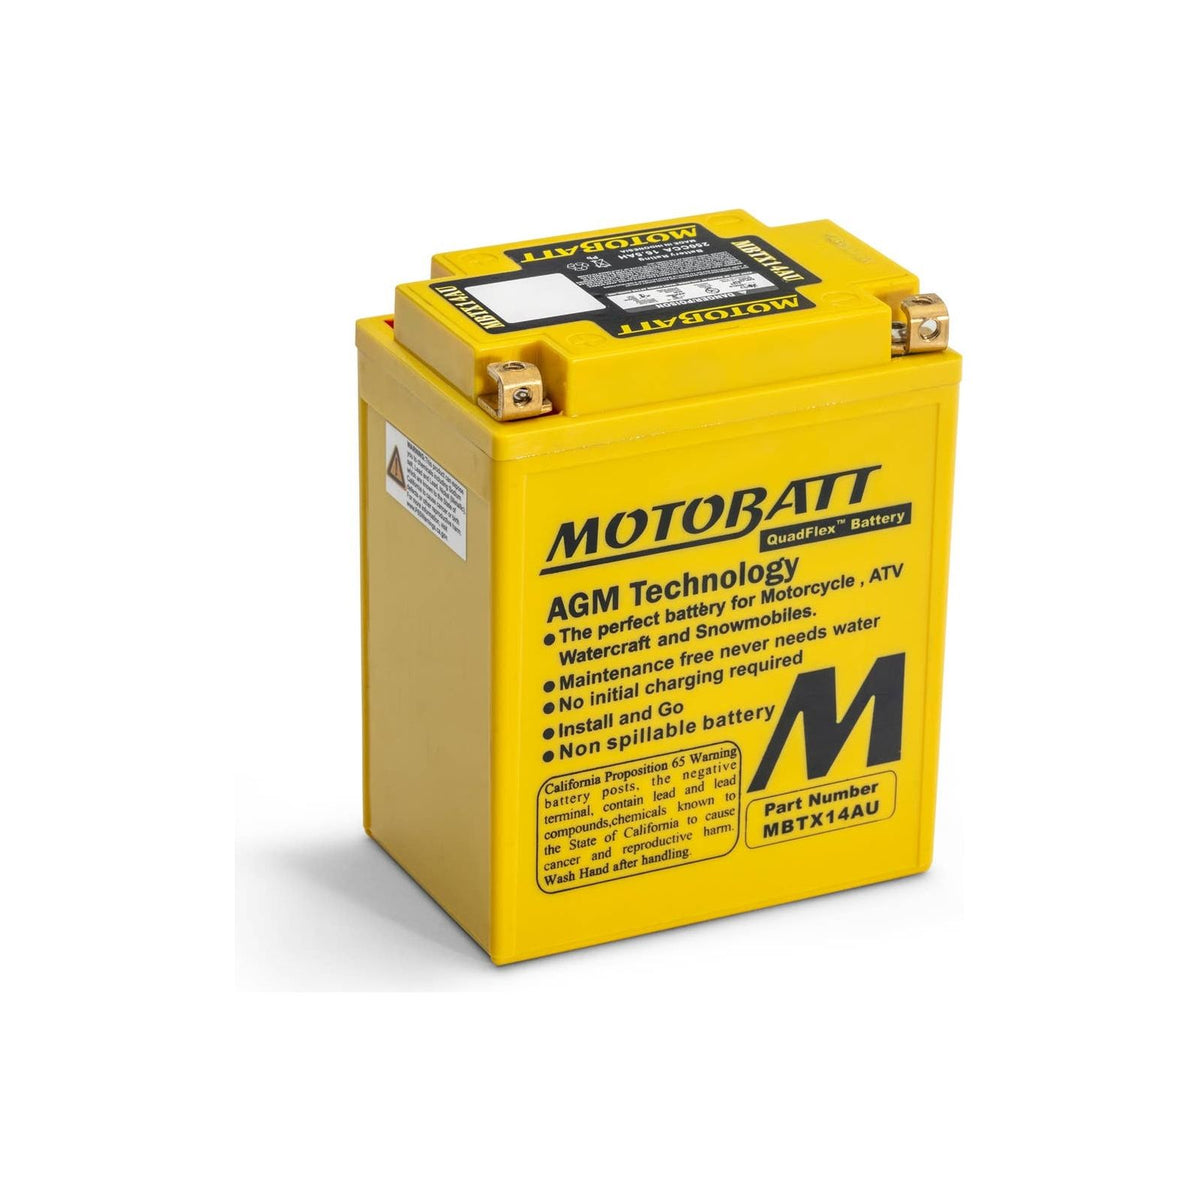 Kawasaki Mule Motobatt Battery Replacement | Motobatt